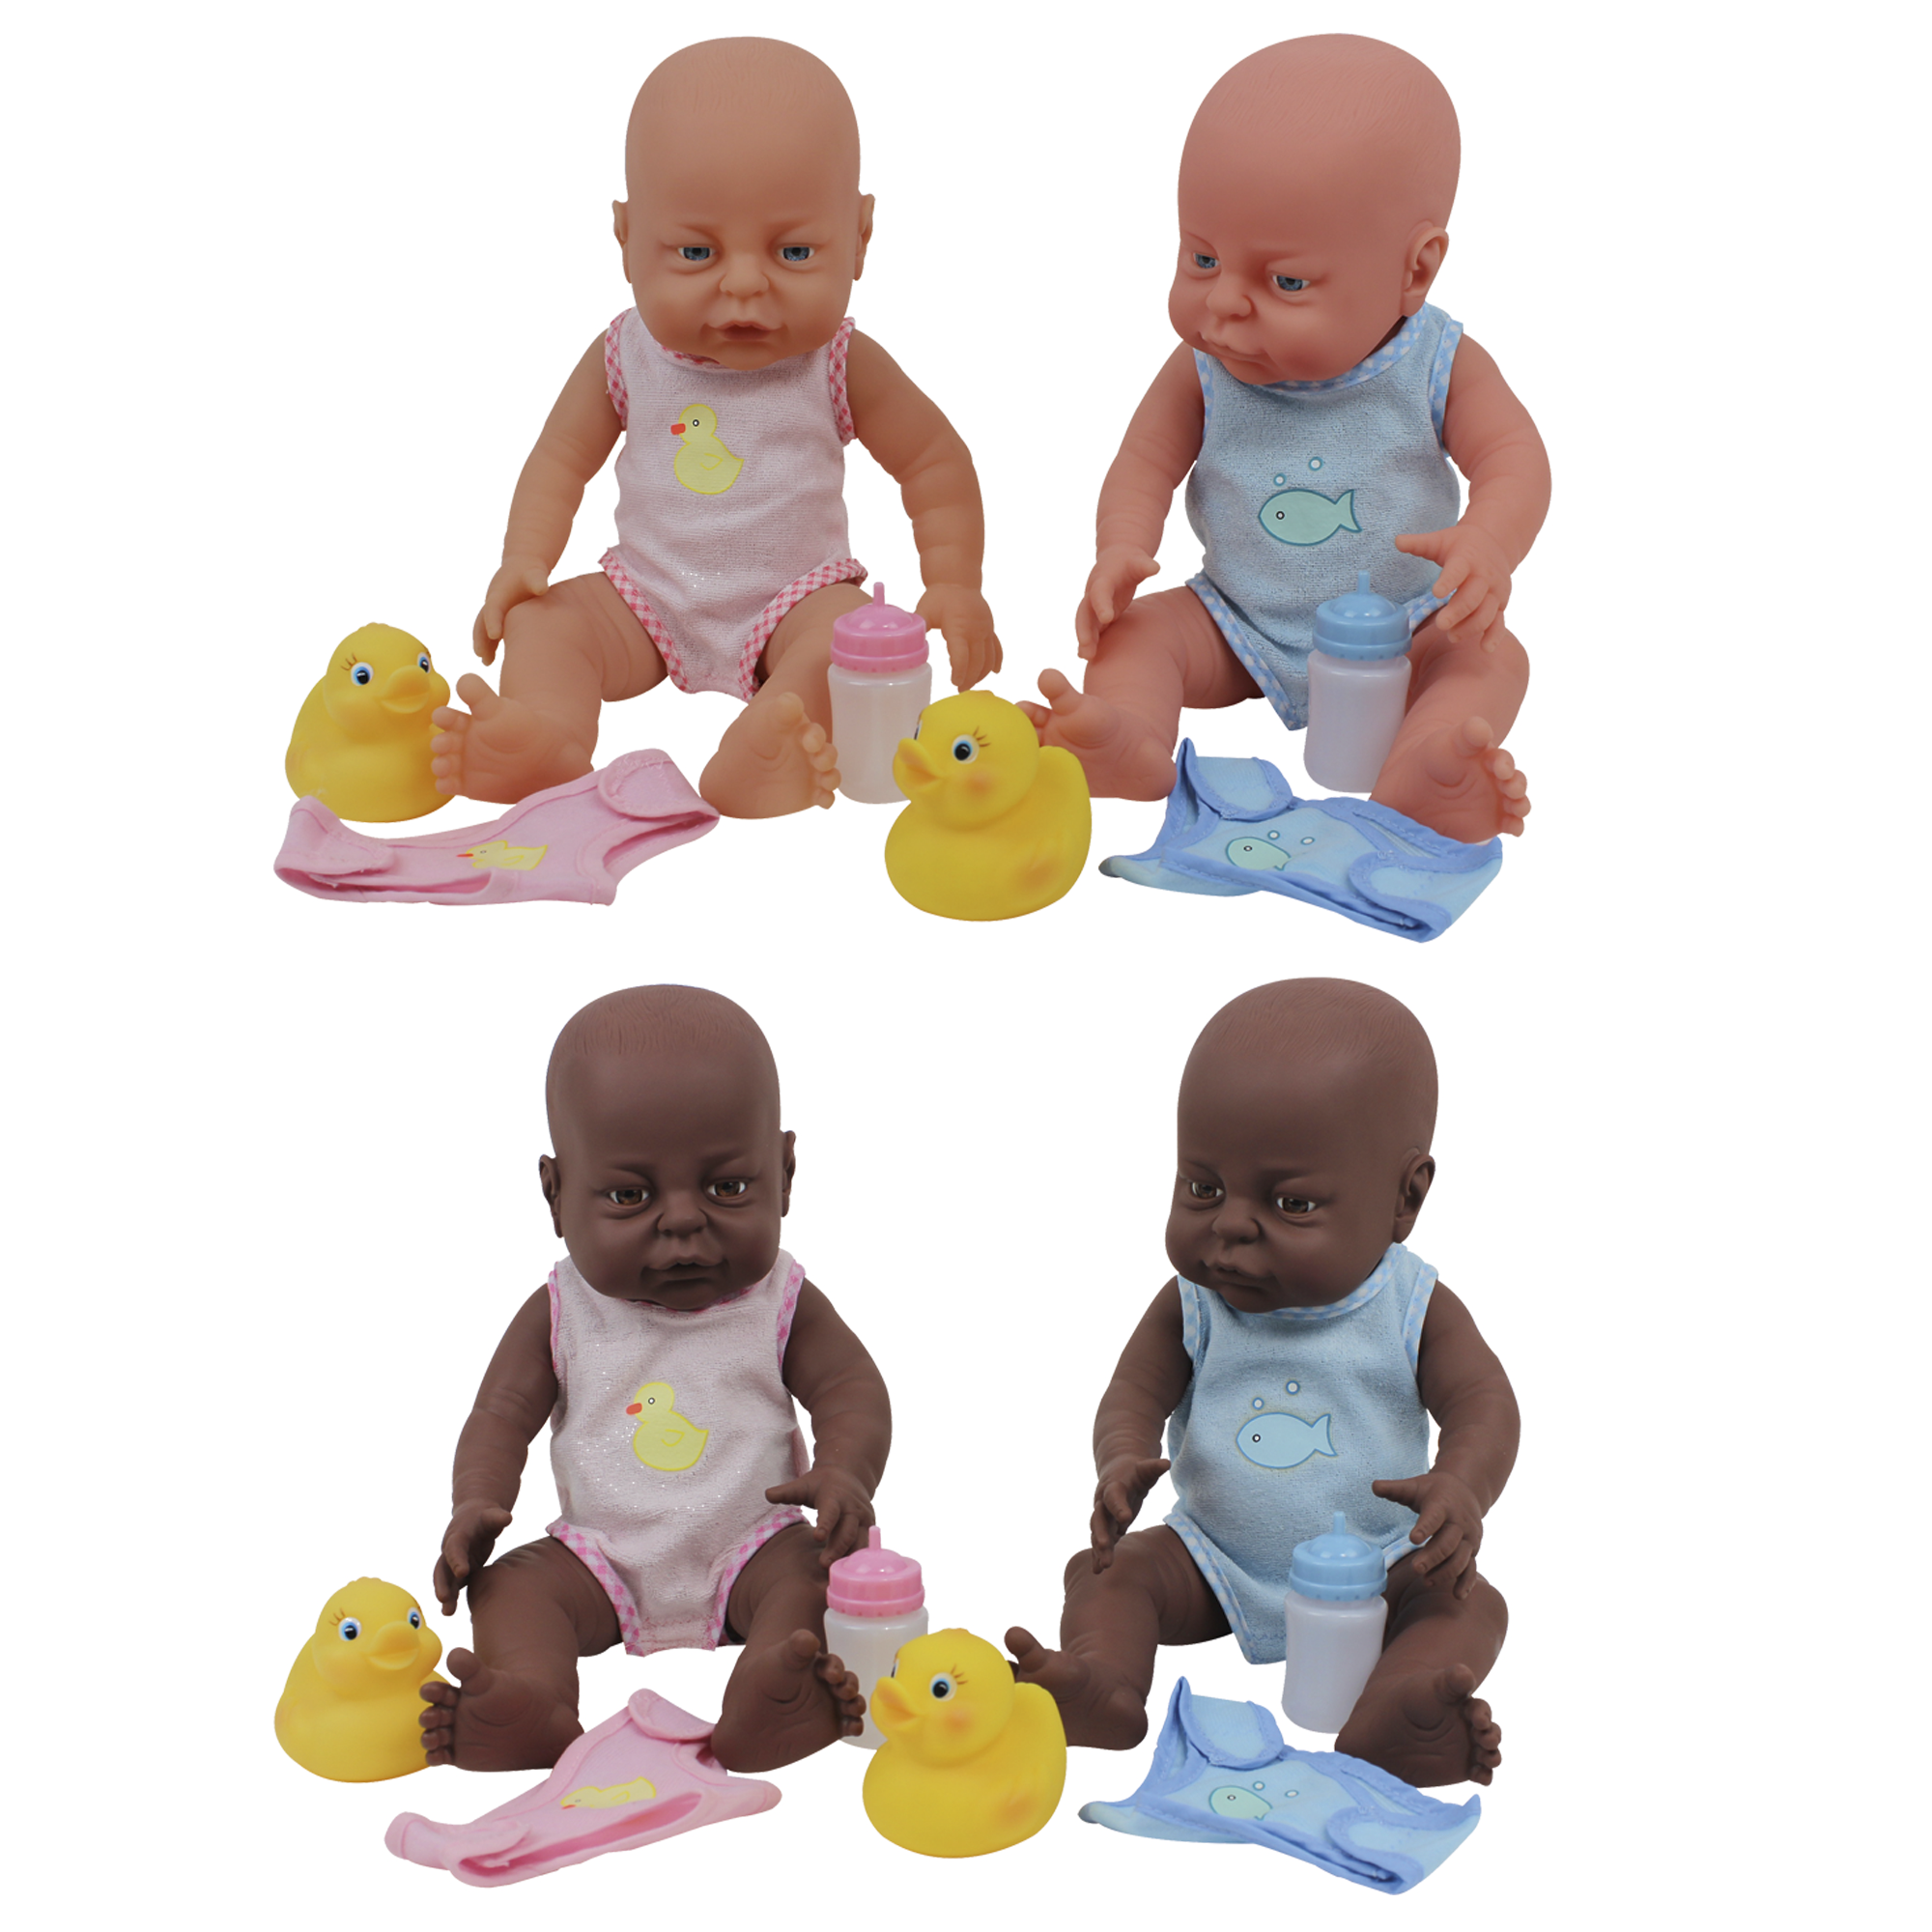 Newborn Clothed Dolls Offer